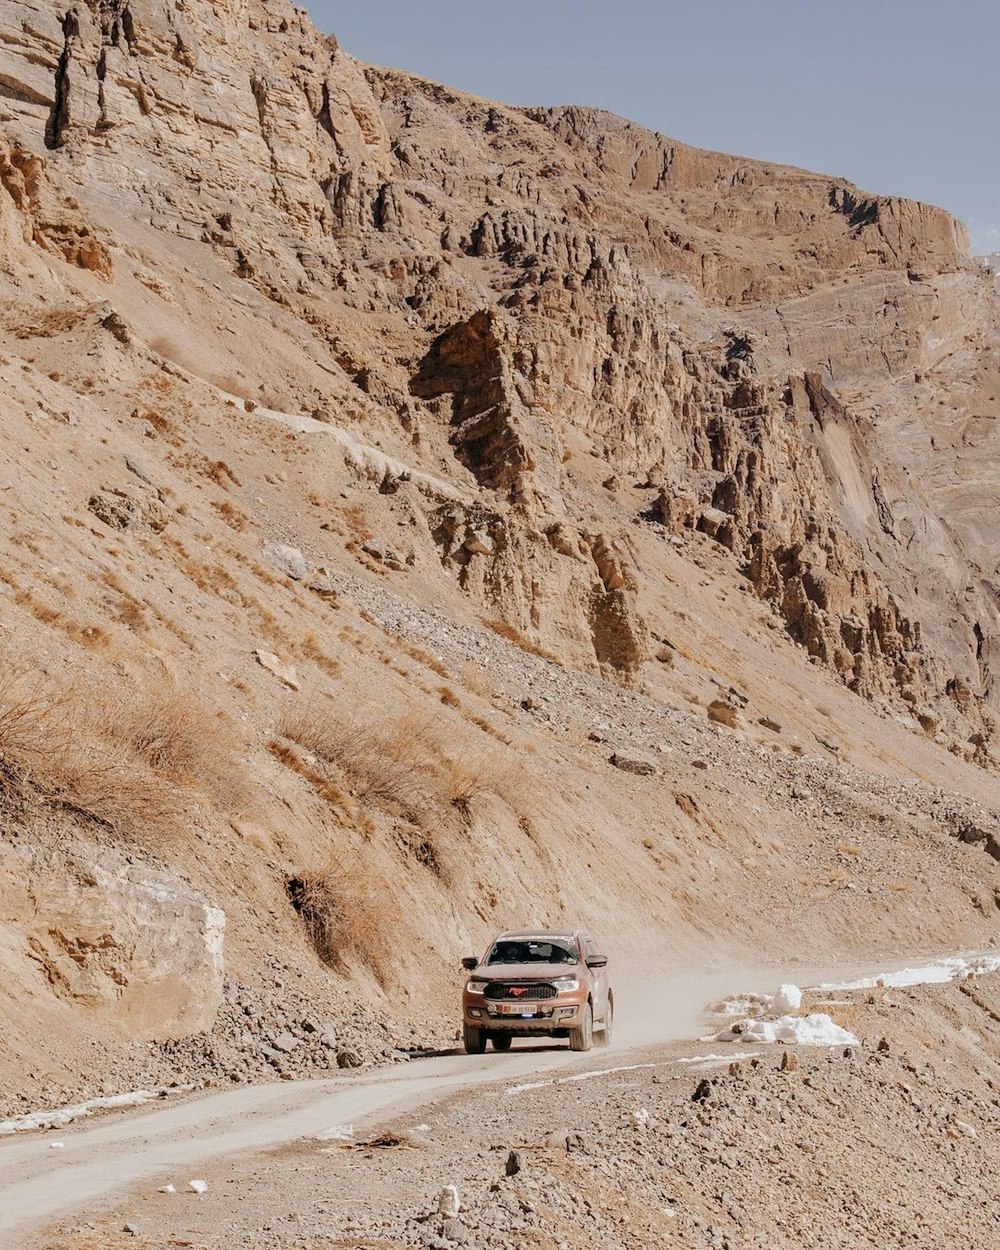 a truck driving through a rocky terrain